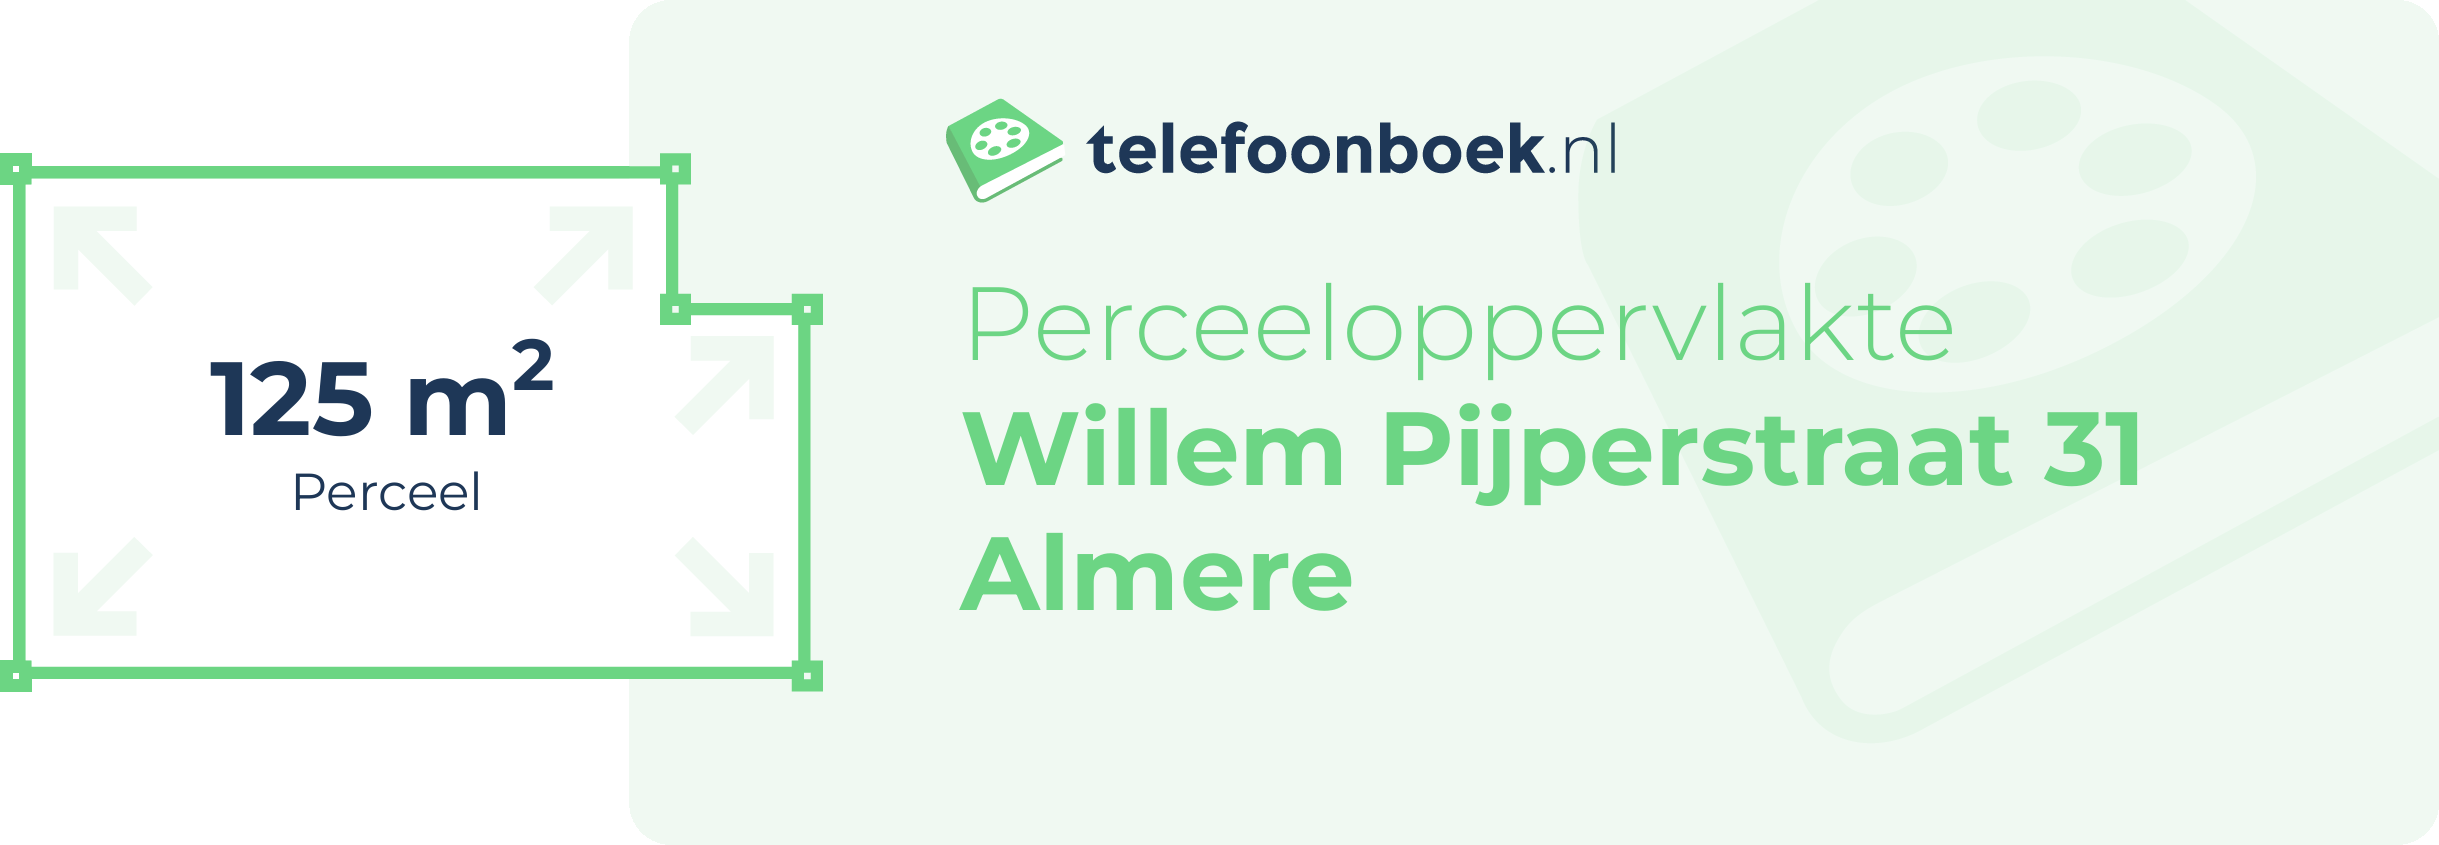 Perceeloppervlakte Willem Pijperstraat 31 Almere